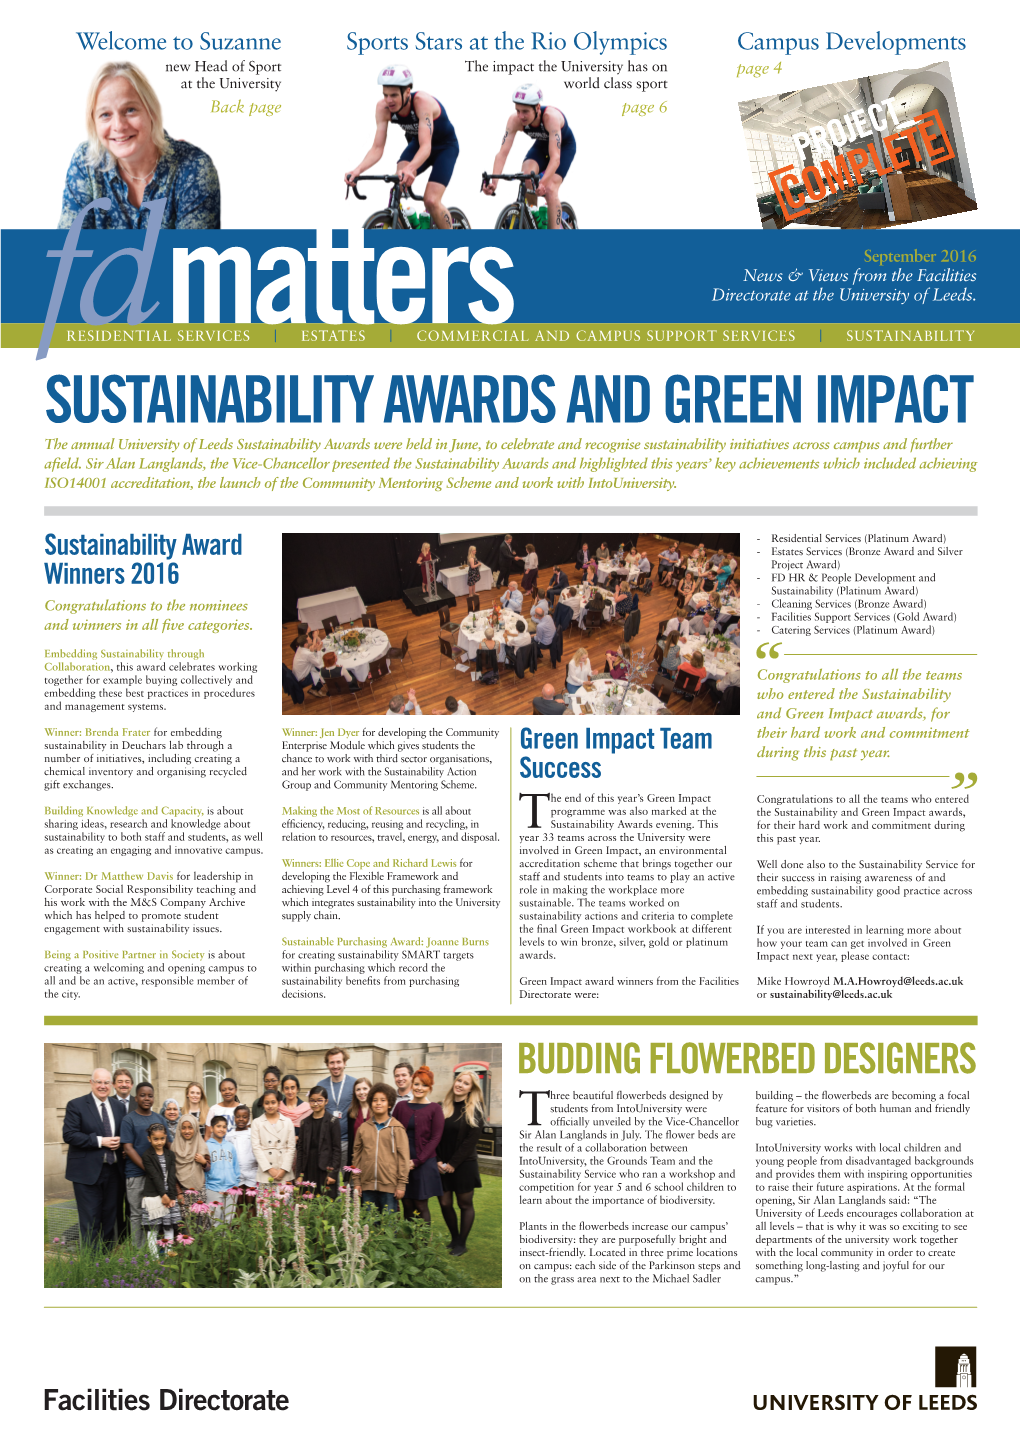 Sustainability Awards and Green Impact